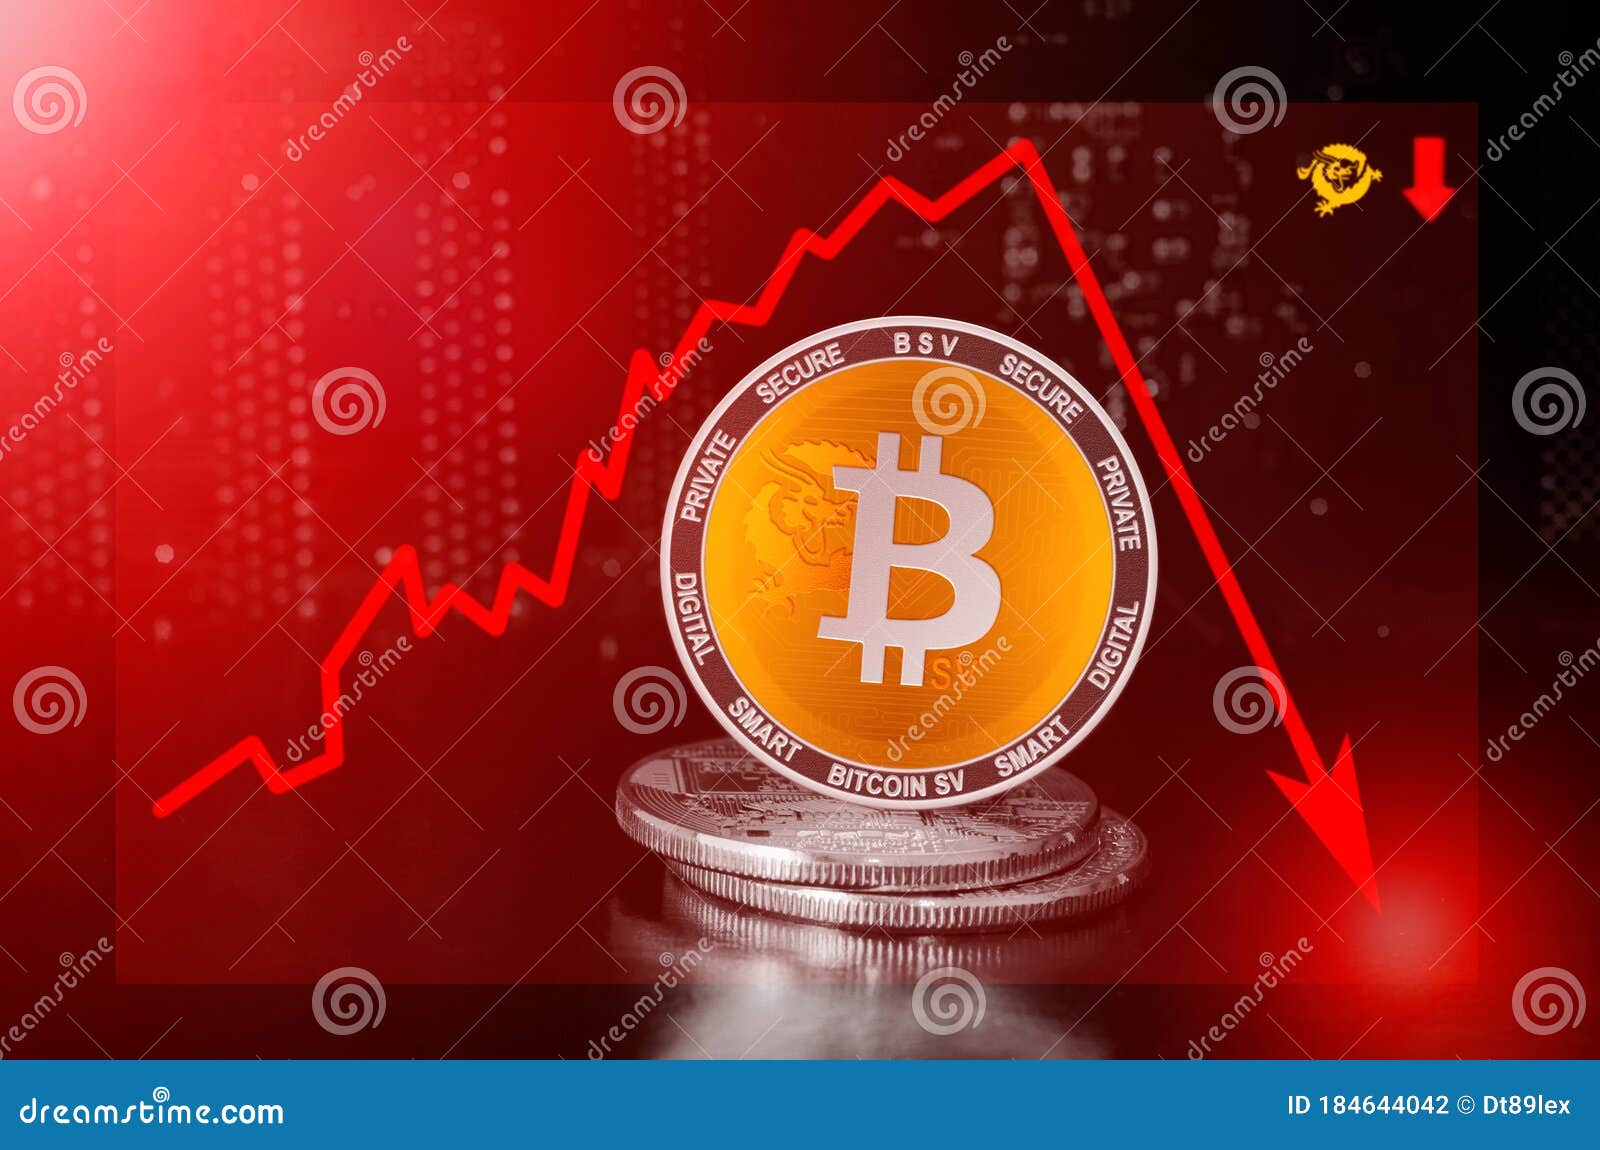 bitcoin sv worth buying